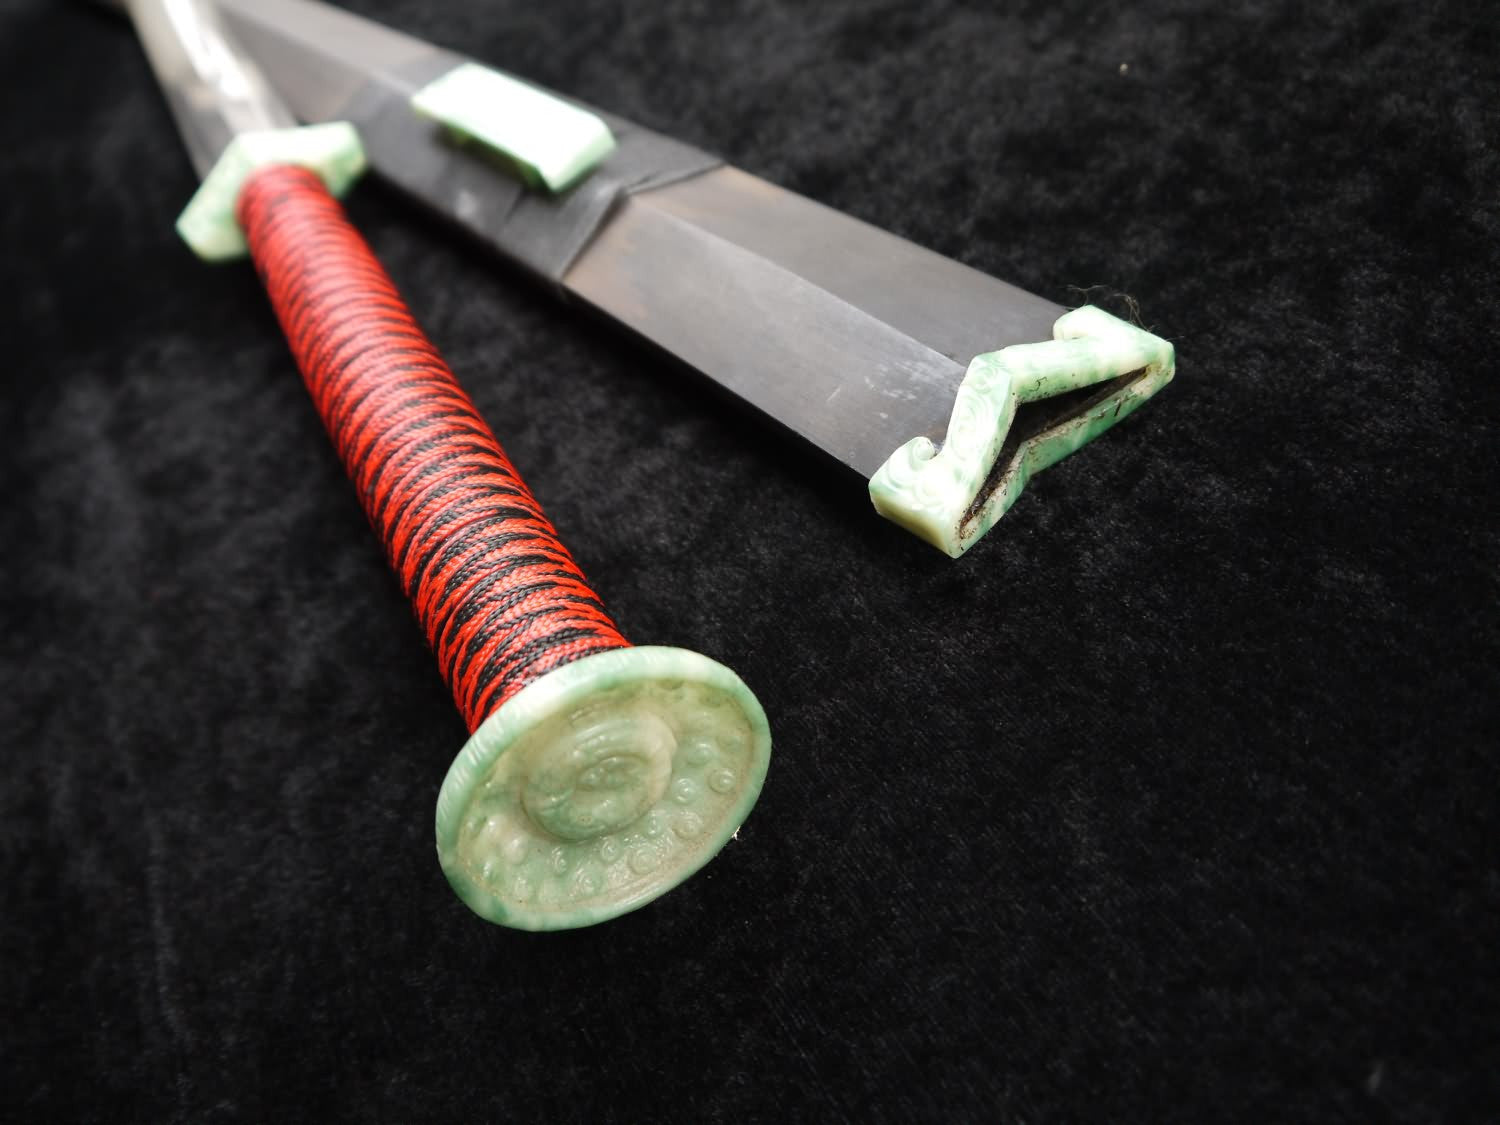 Chinese sword,Han jian,Folded steel blade,Black wood scabbard,Resin fitting - Chinese sword shop